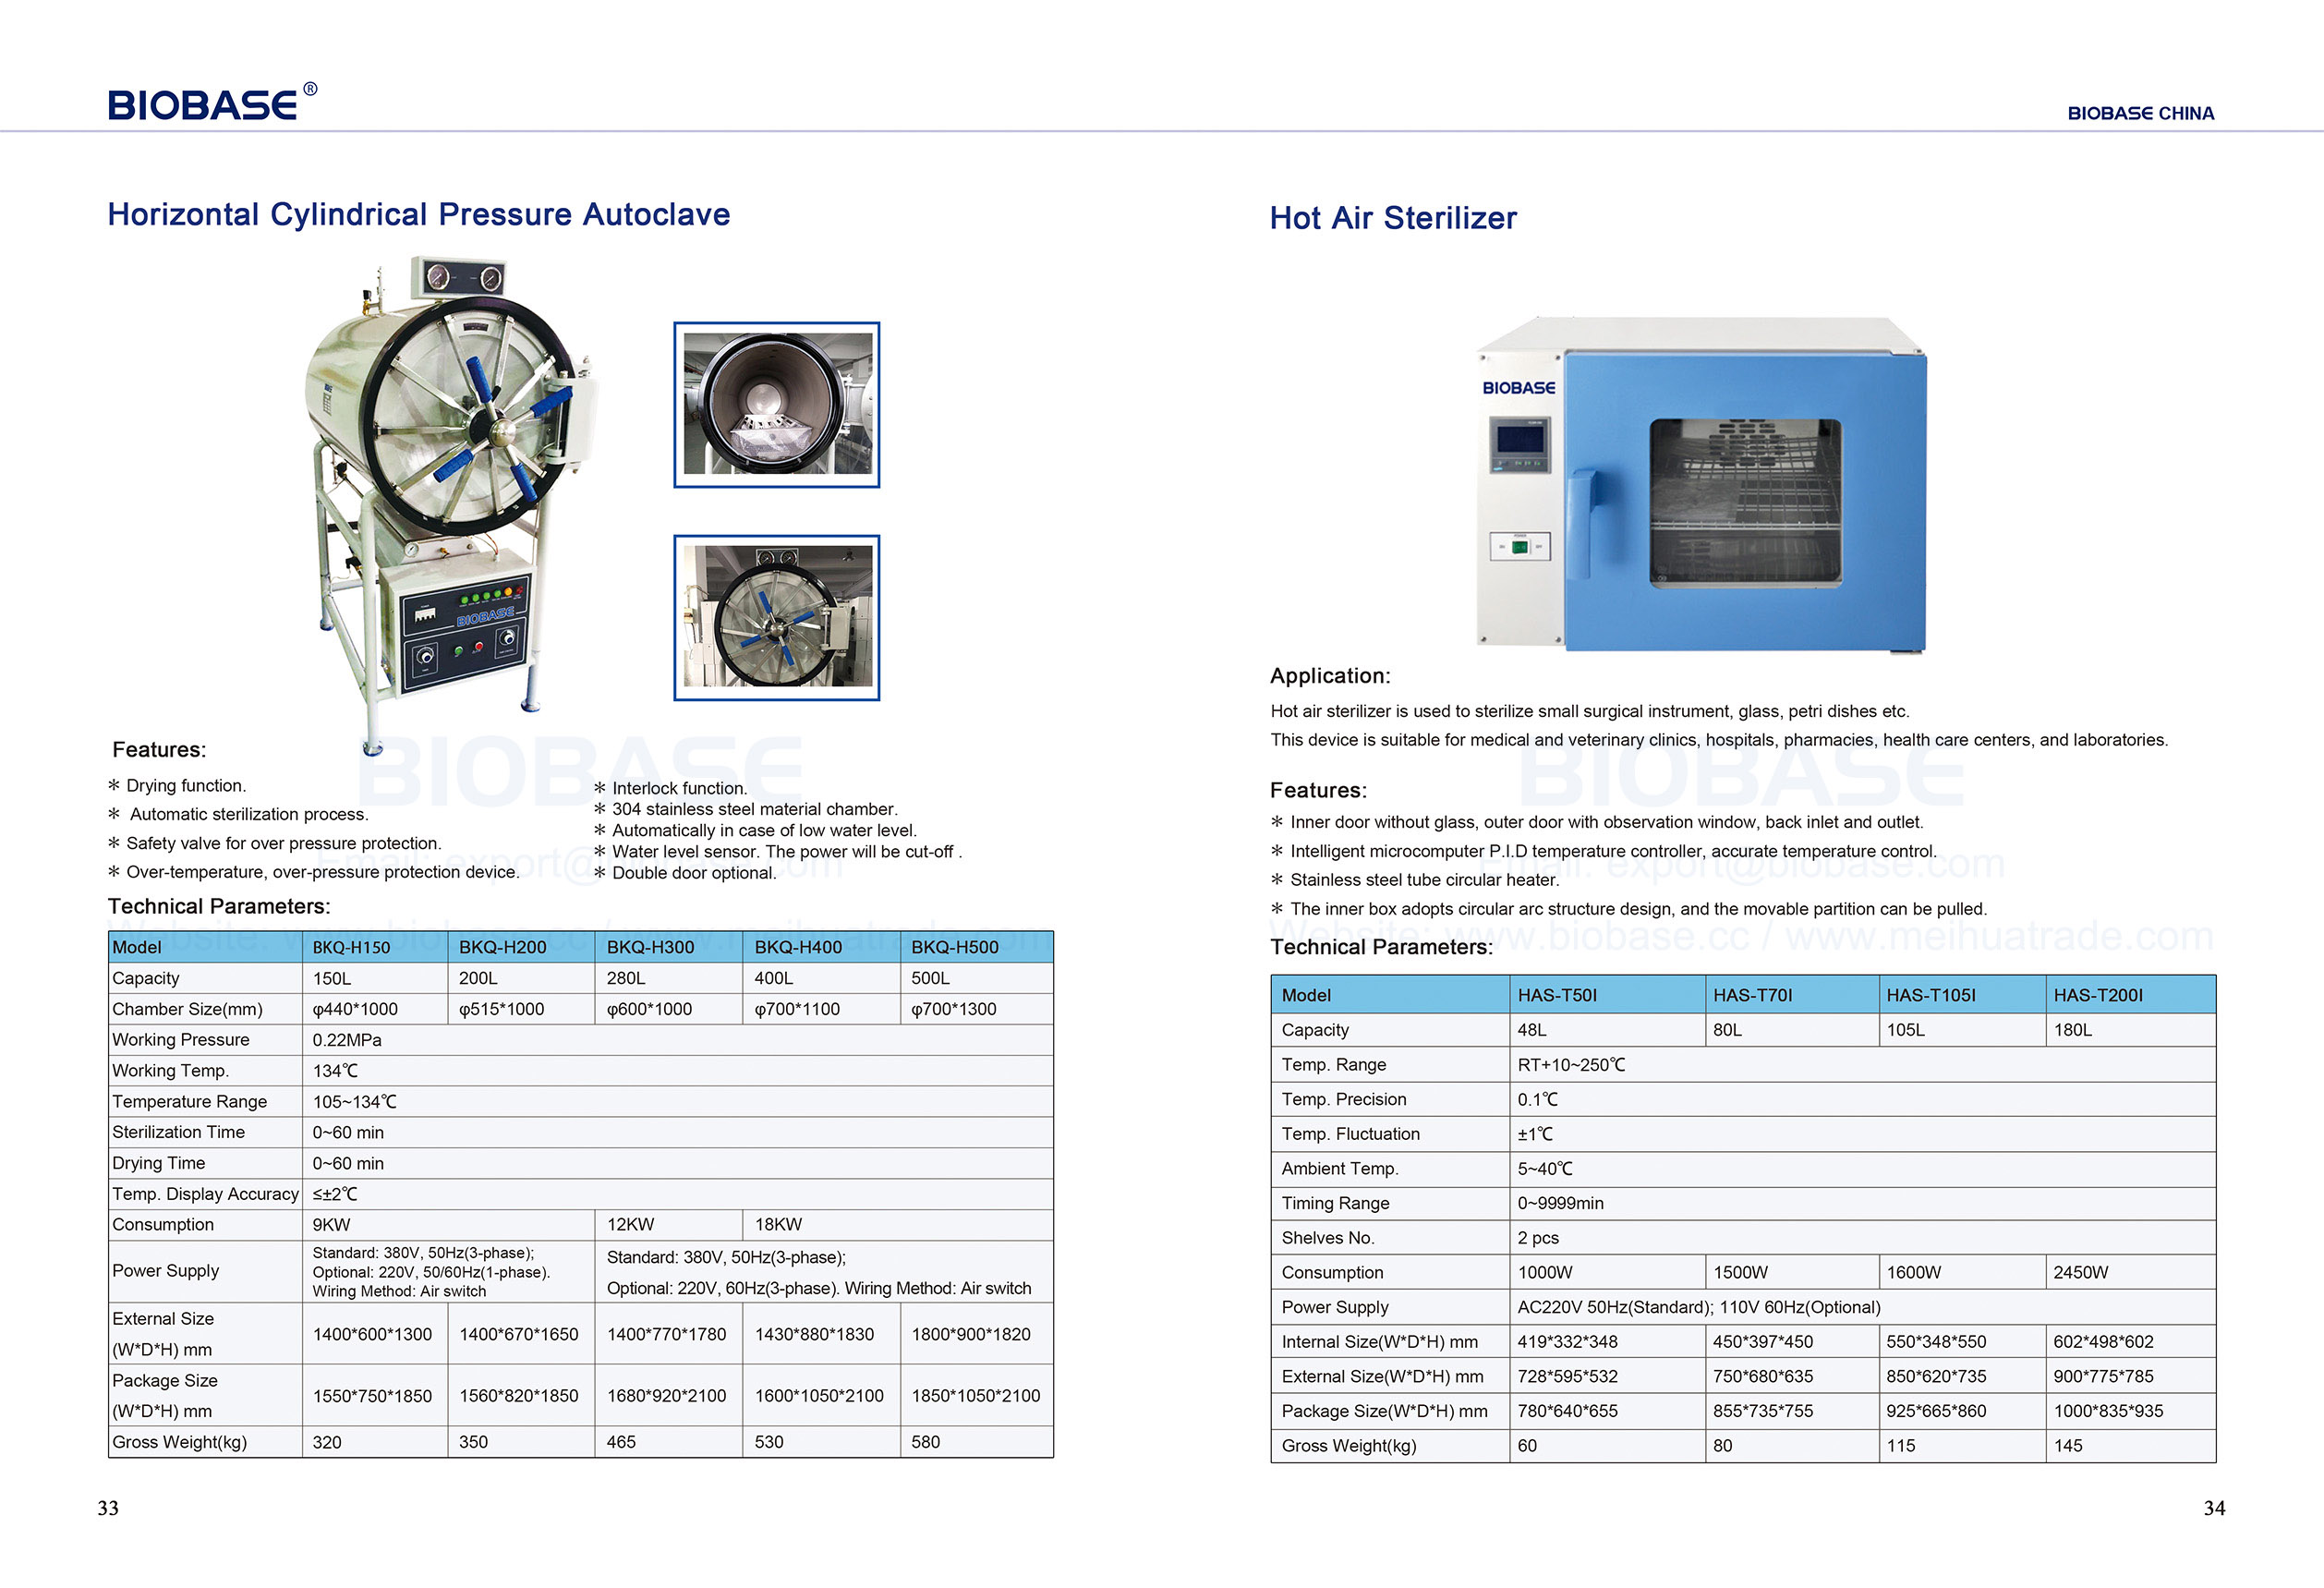 33-34 Horizontal Cylindrical Pressure Autoclave& Hot Air Sterilizer